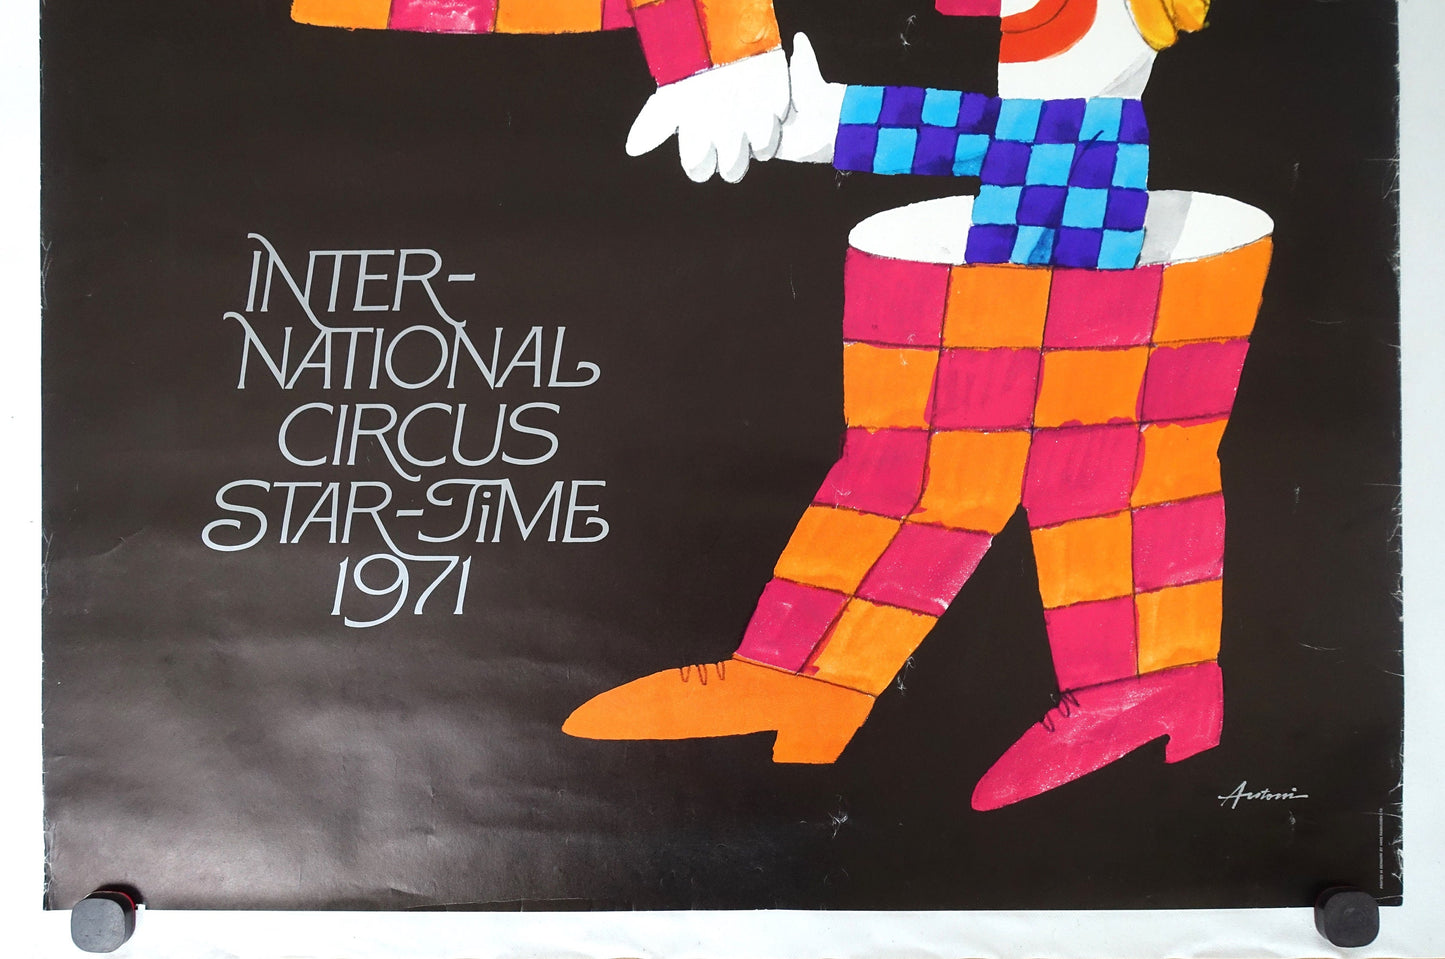 1971 Circus Benneweis by Ib Antoni - Original Vintage Poster